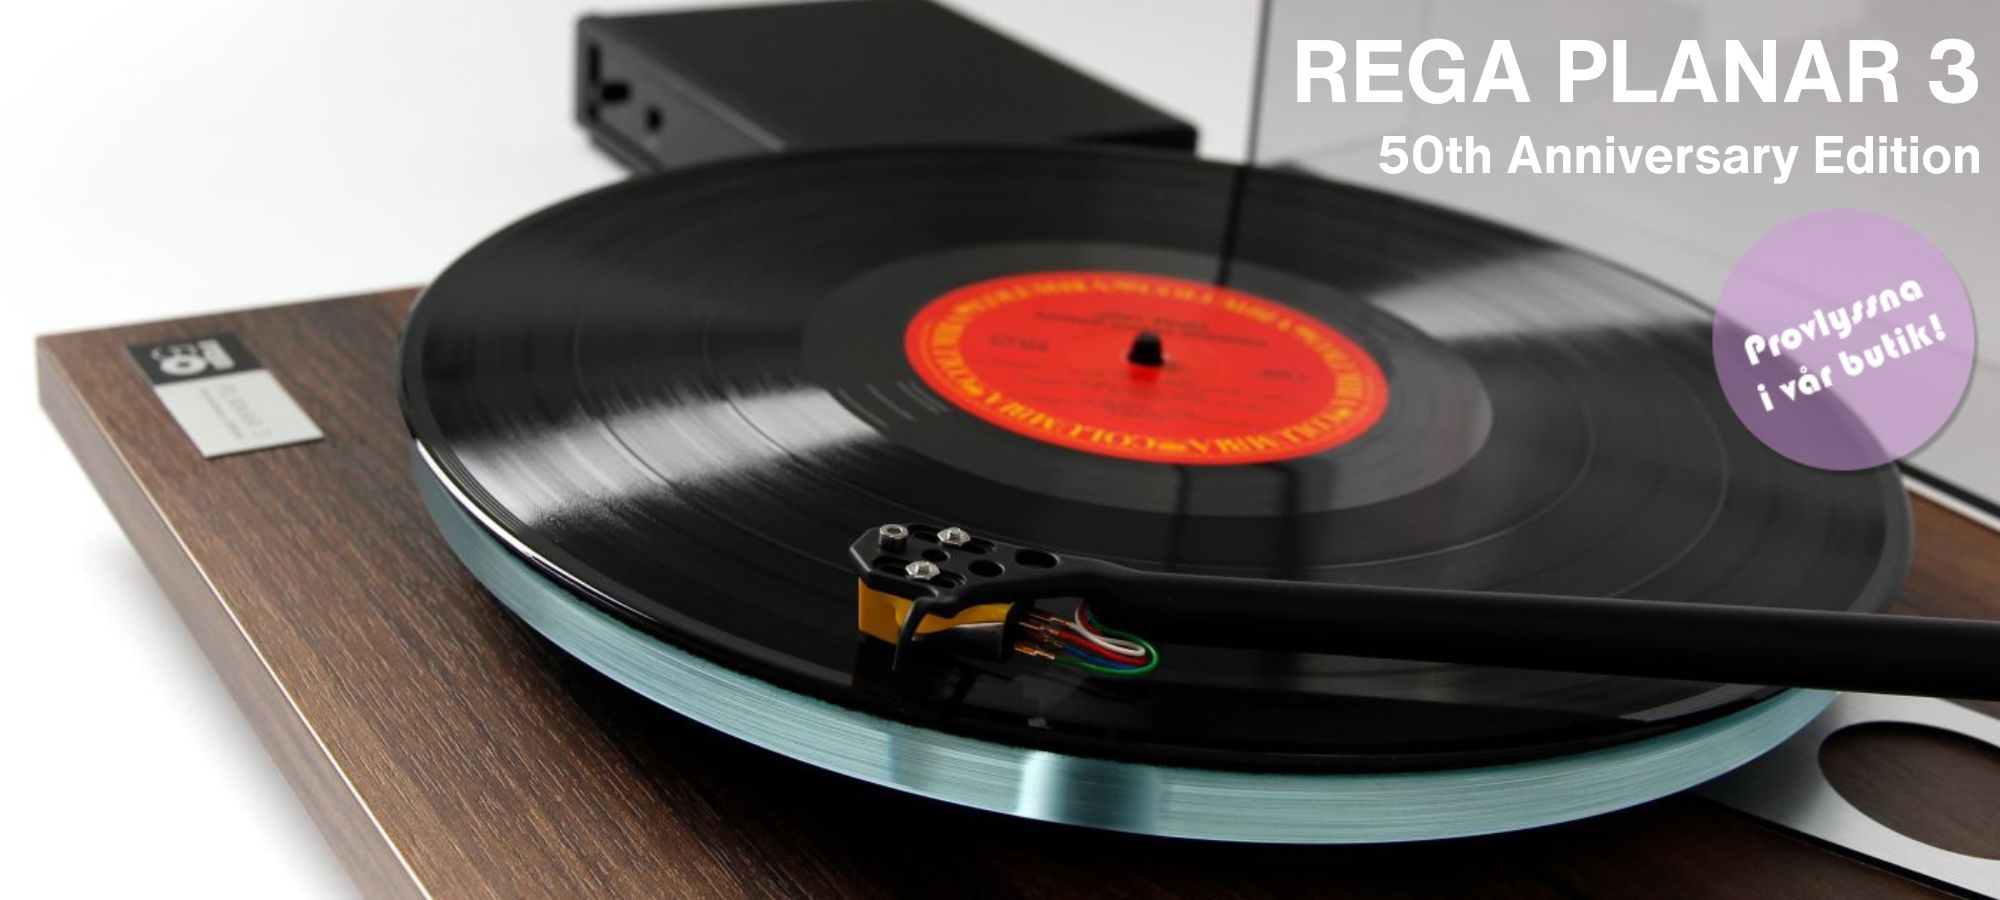 Rega Planar 3 50th Anniversary Edition